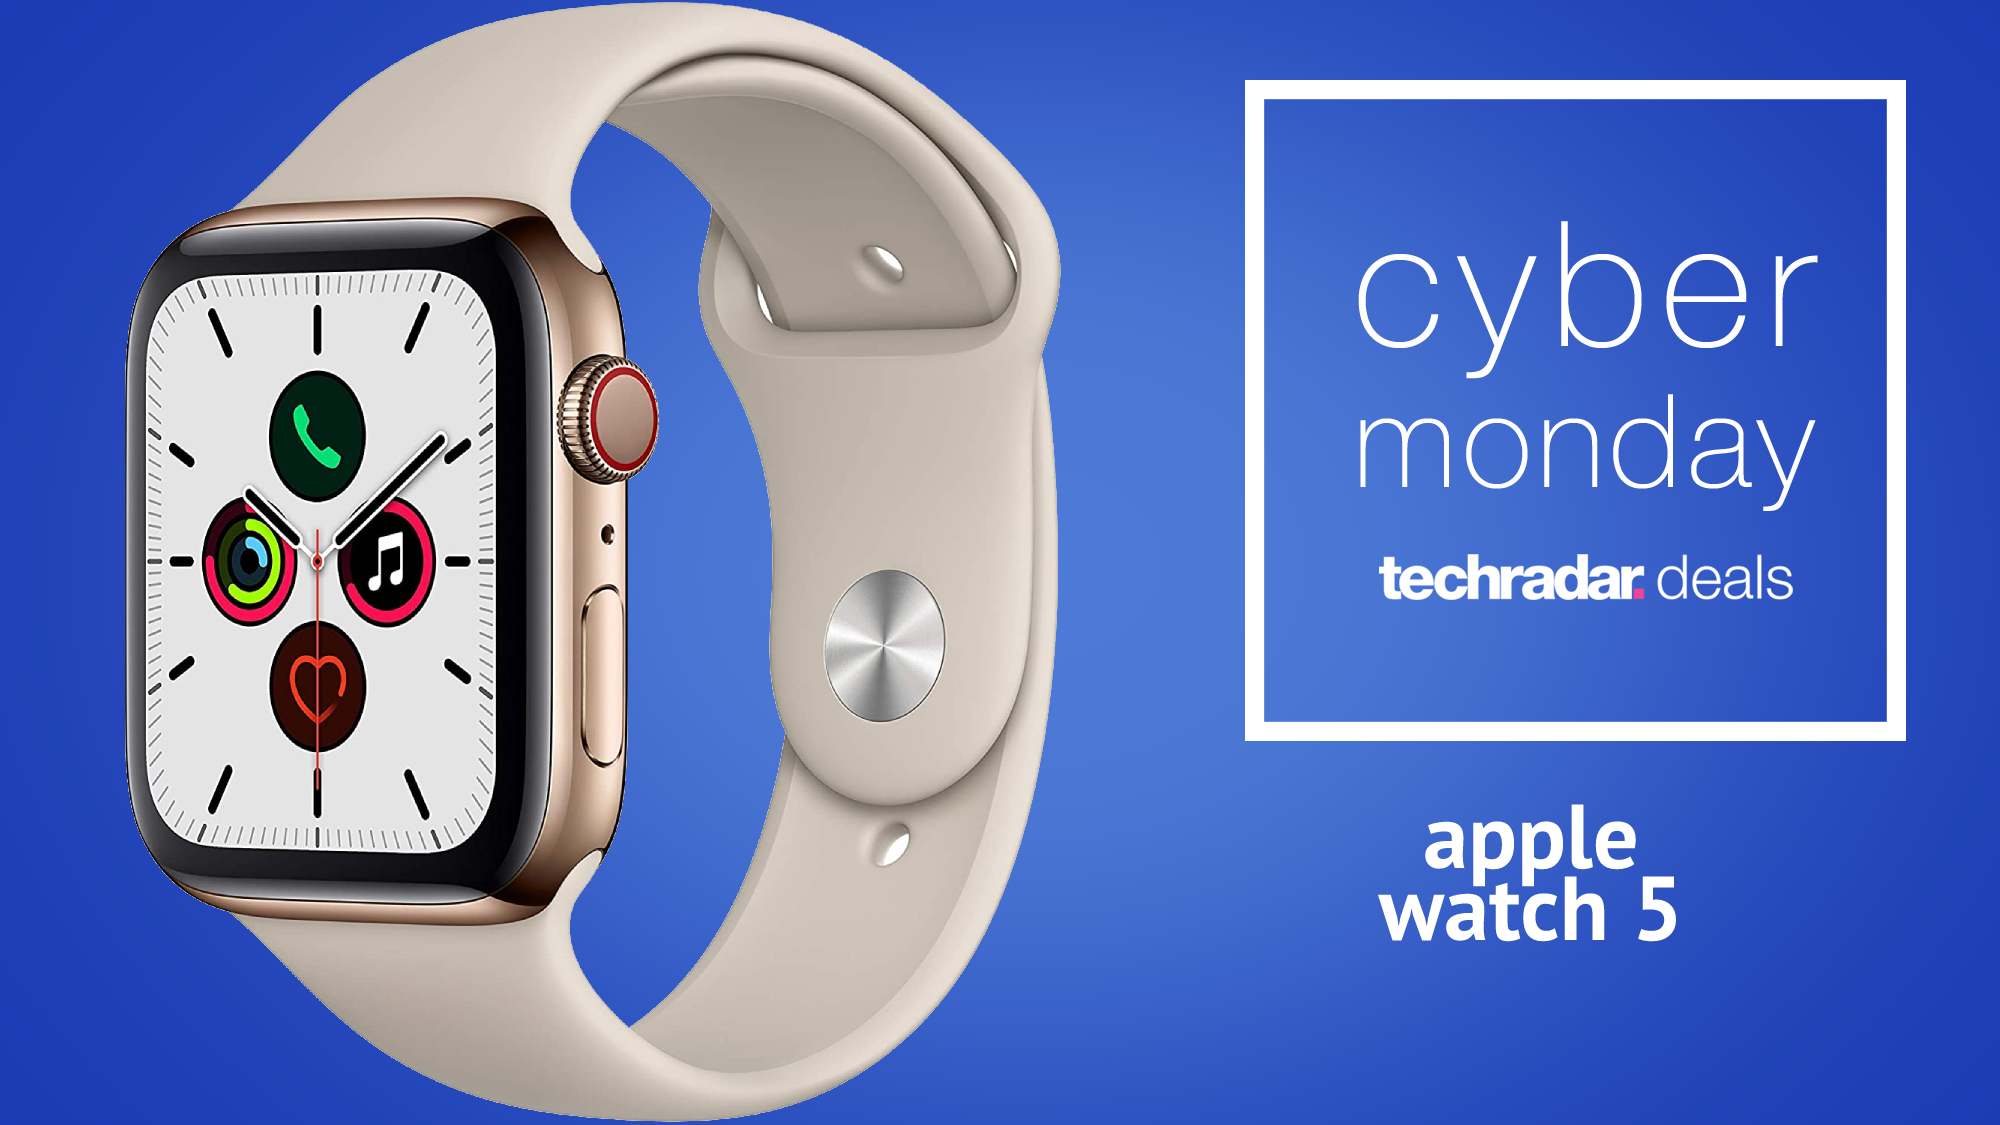 Apple Watch 5 CM deal